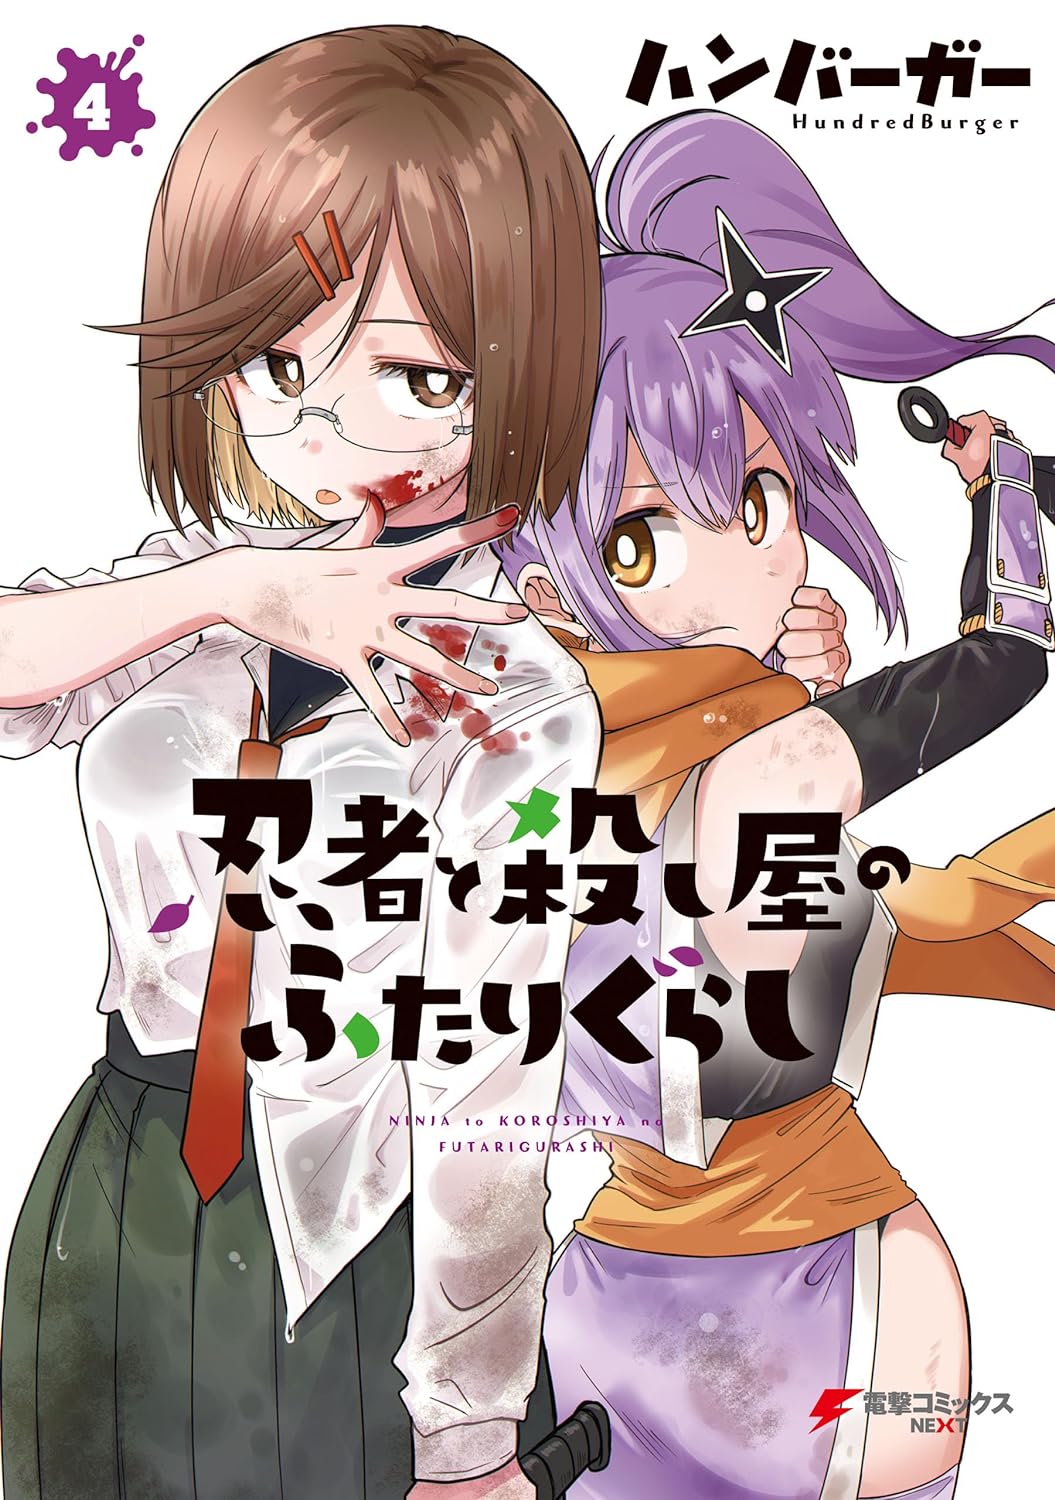 Ninja to Koroshiya no Futarigurashi Manga Cover Volume 4